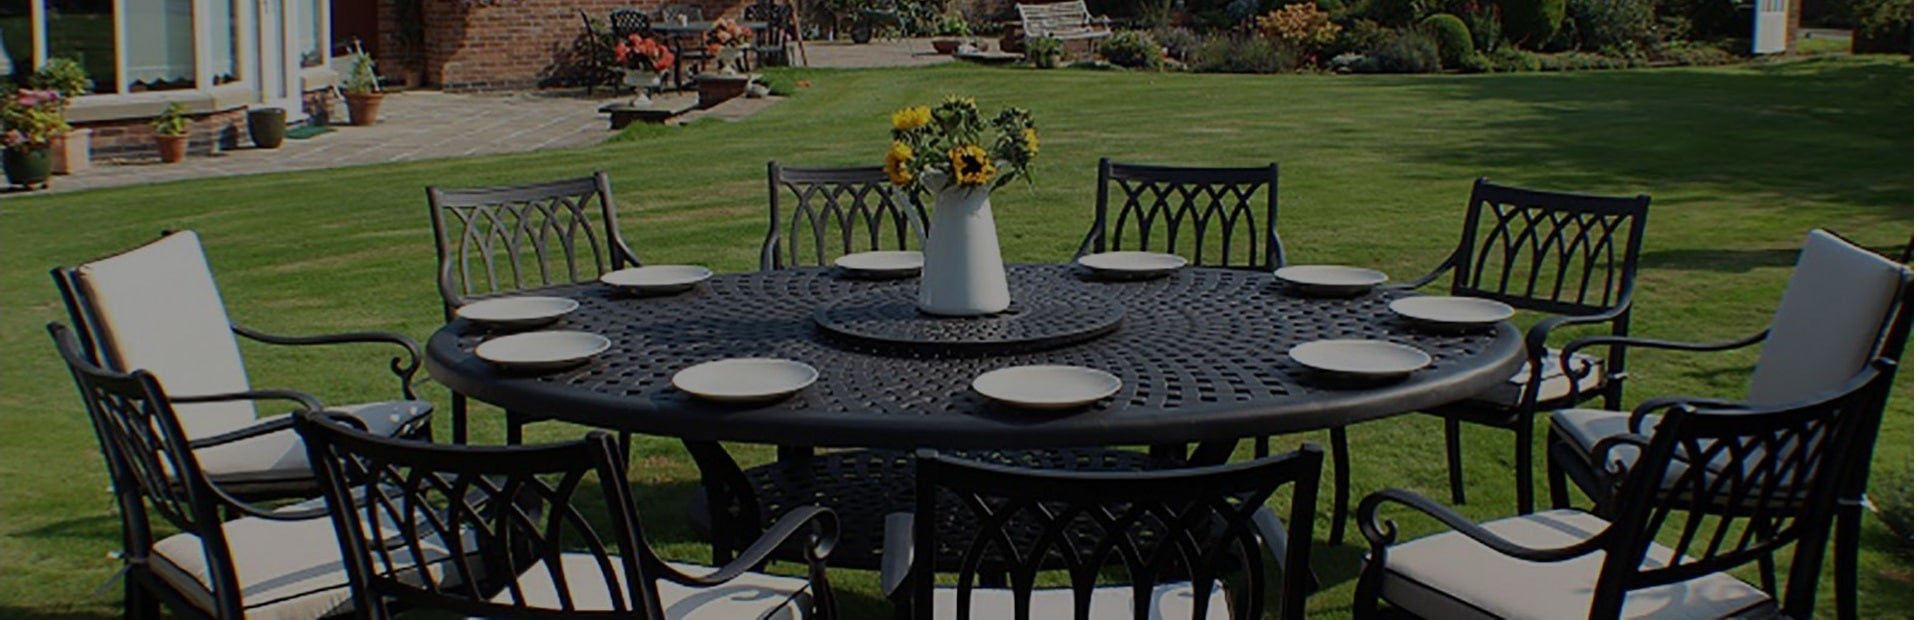 12 Seat Garden Dining Sets - Only Oak Furniture - Furee UK Delivery